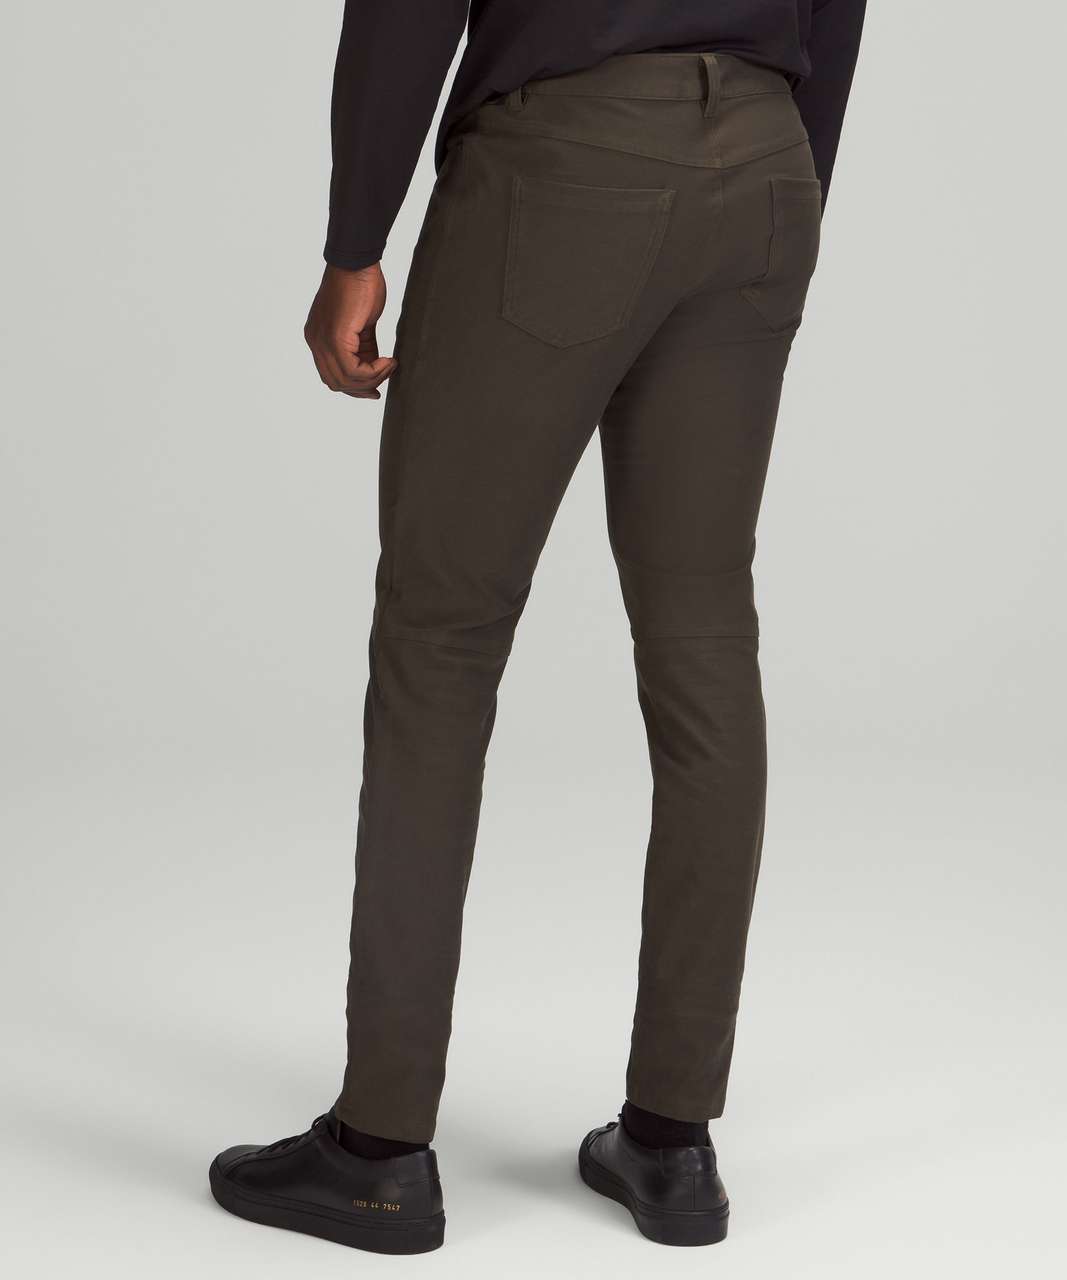 NWT Lululemon Men's ABC Pant Slim 28 Length 33x28 Color Artifact